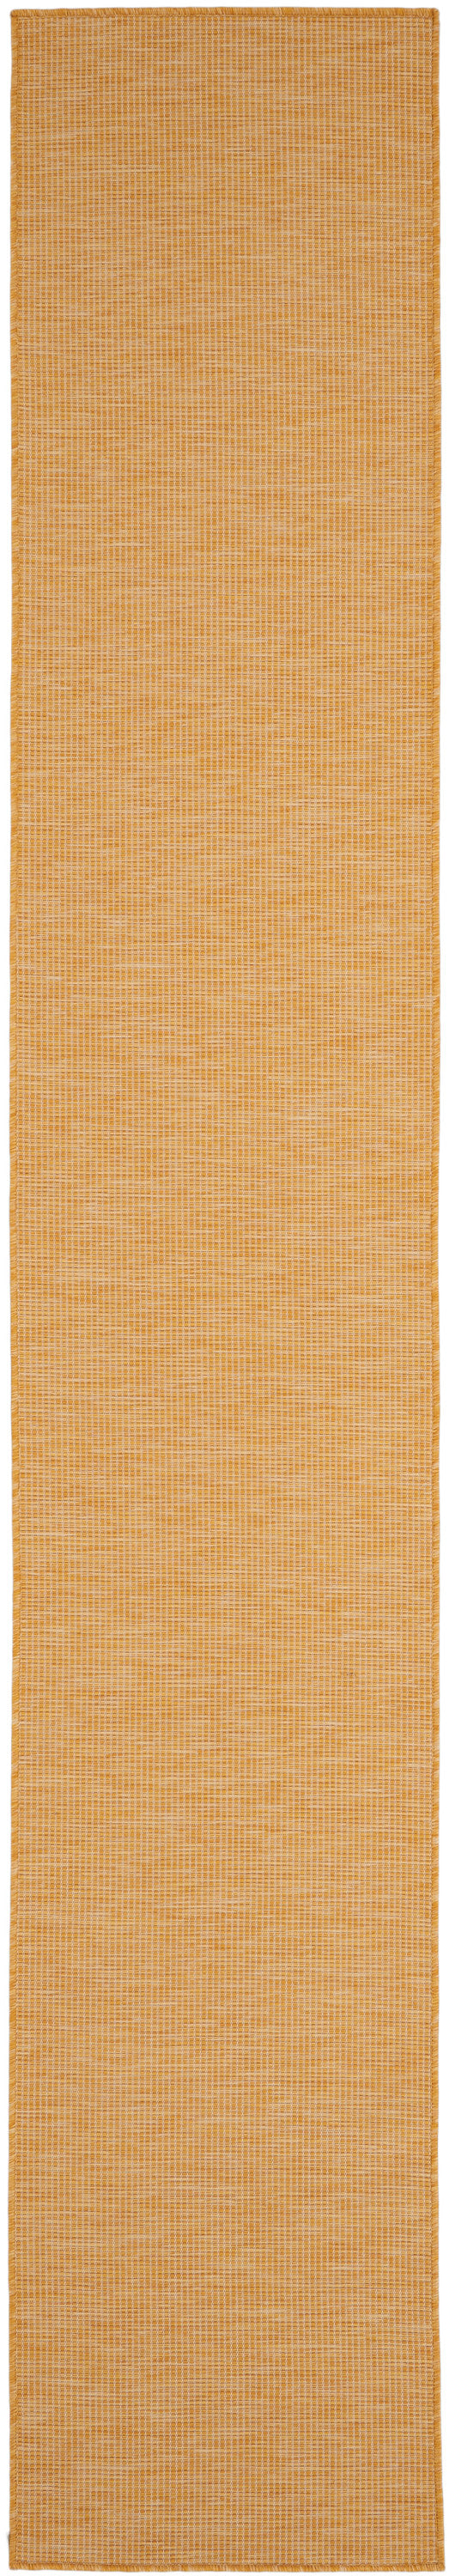 media image for positano yellow rug by nourison 99446842442 redo 3 273